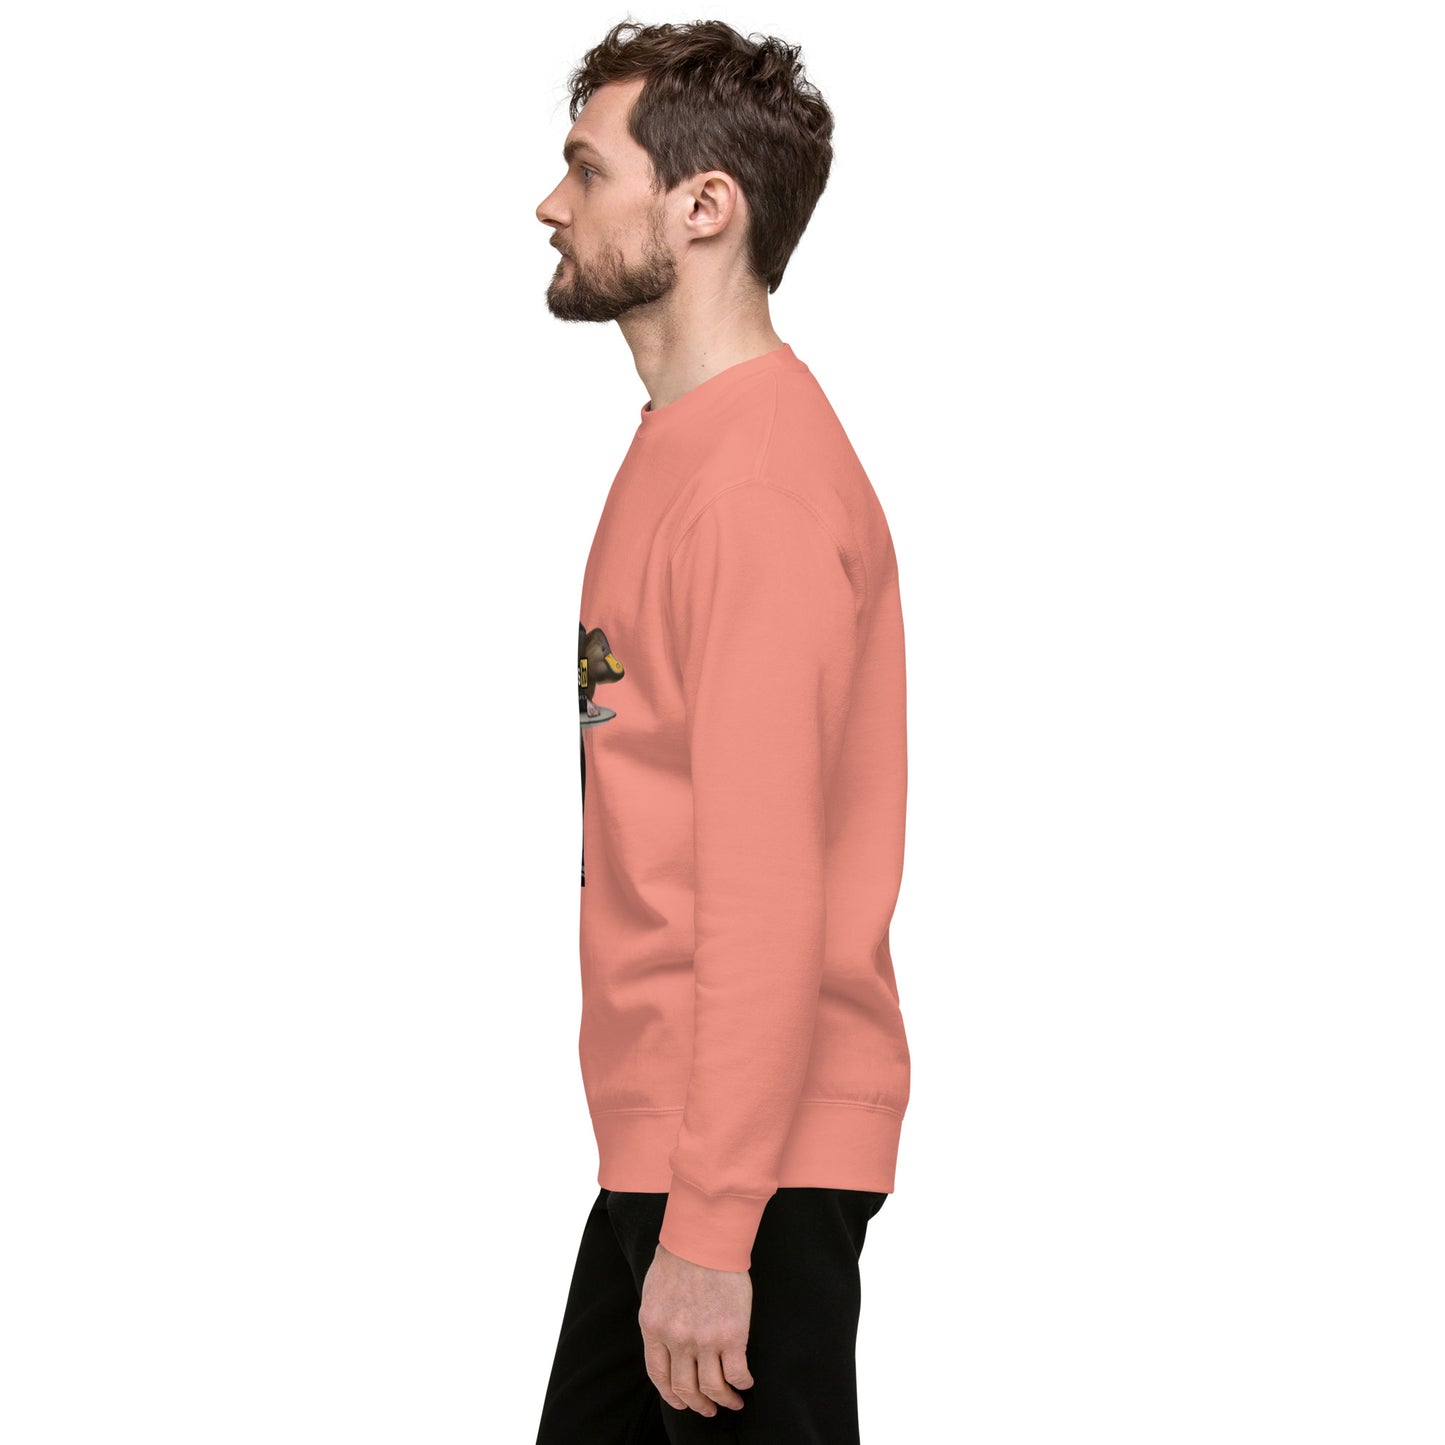 Dubs Hub All Comers Unisex  Premium Sweatshirt